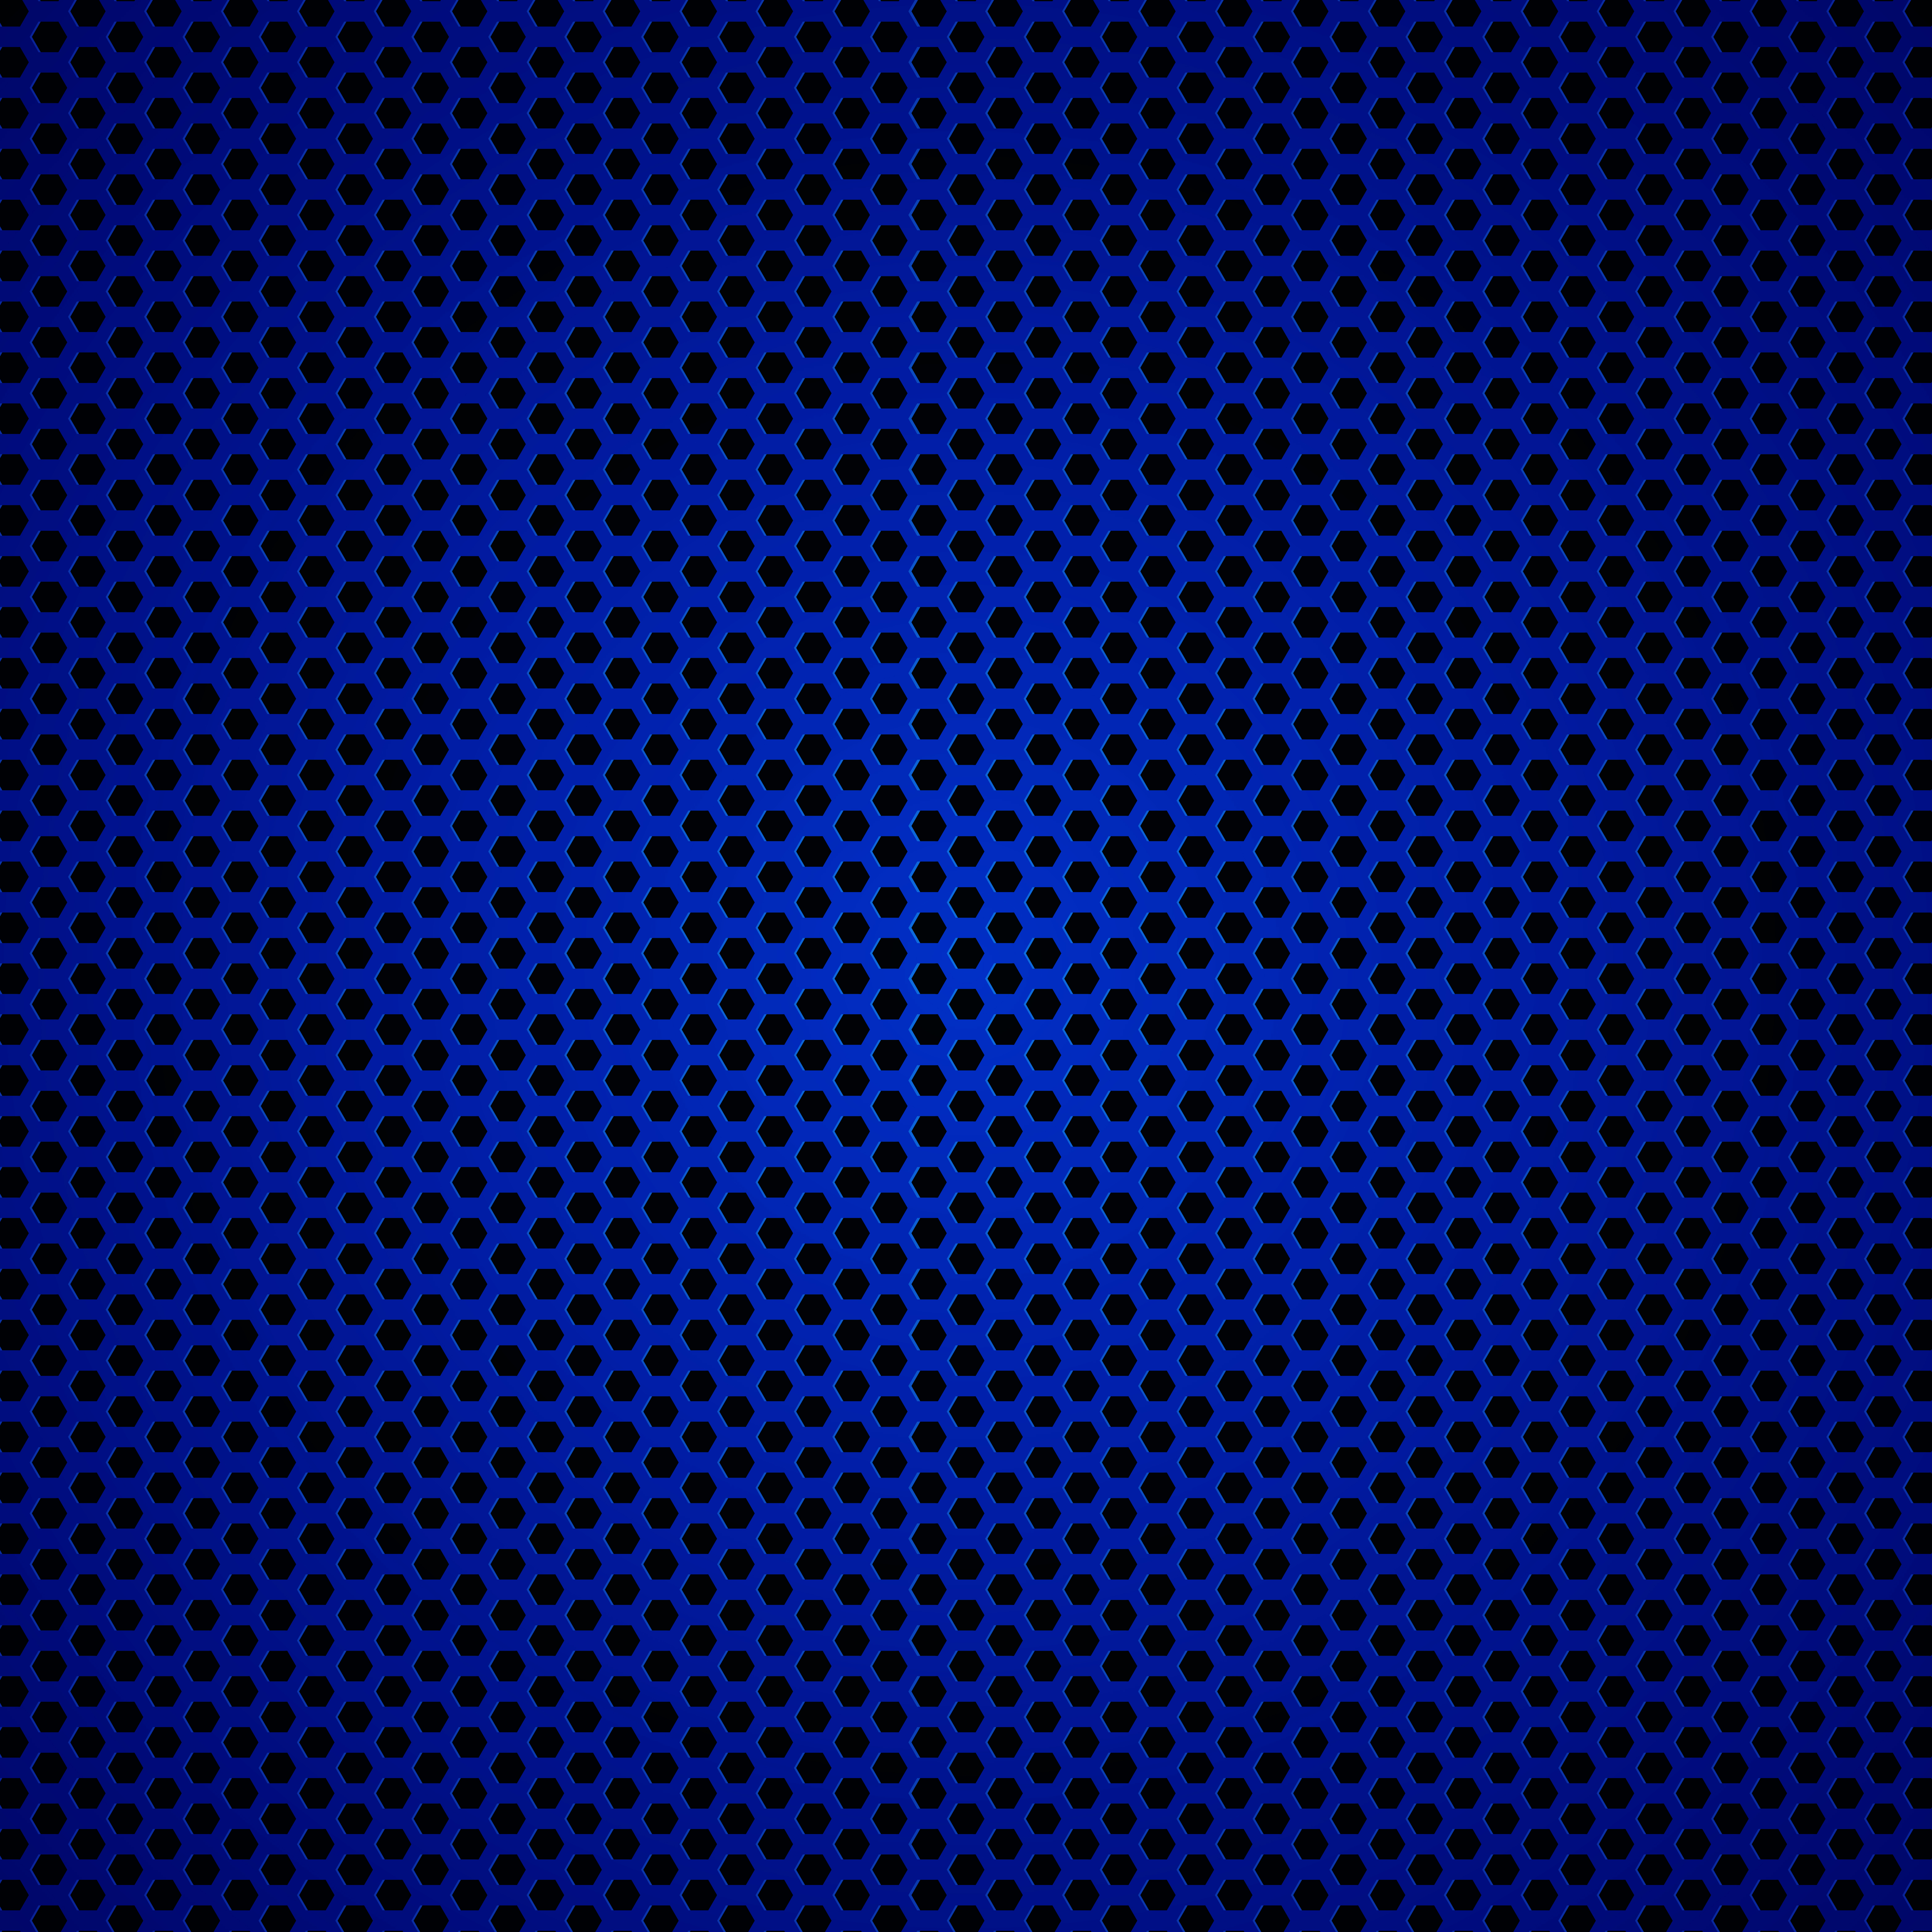 Blue carbon fiber texture wallpapers picture hd download - Carbon